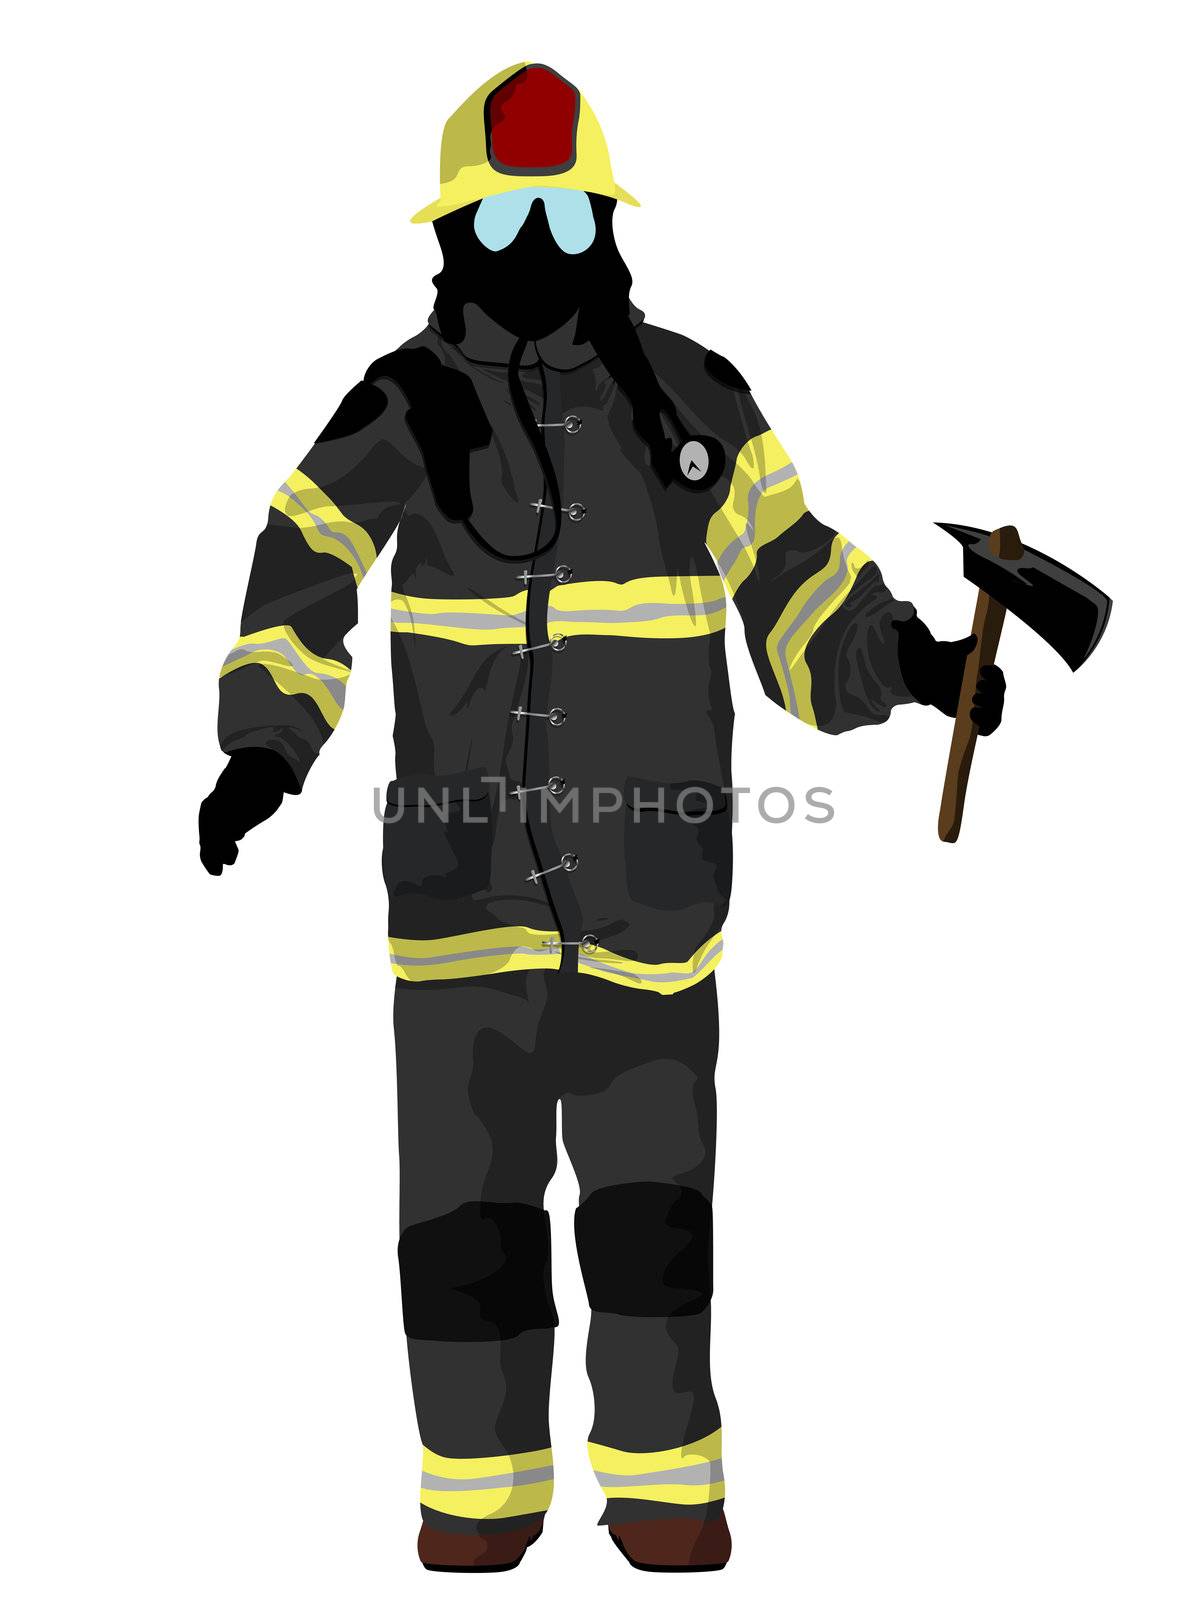 Firefighter by Lirch